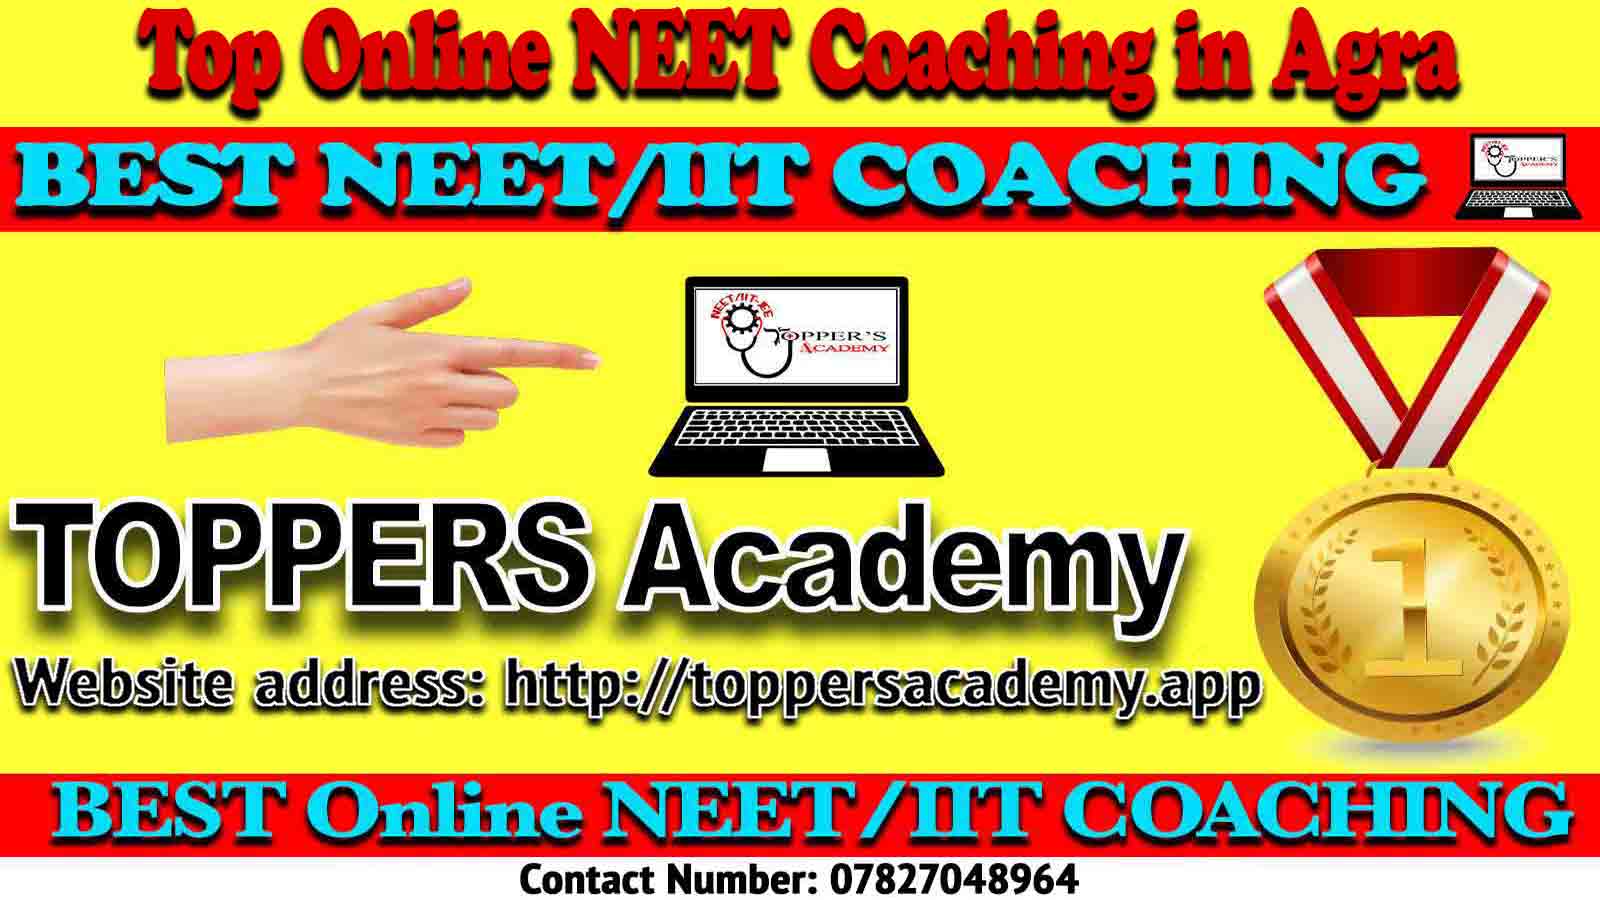 Best Online NEET Coaching in Agra